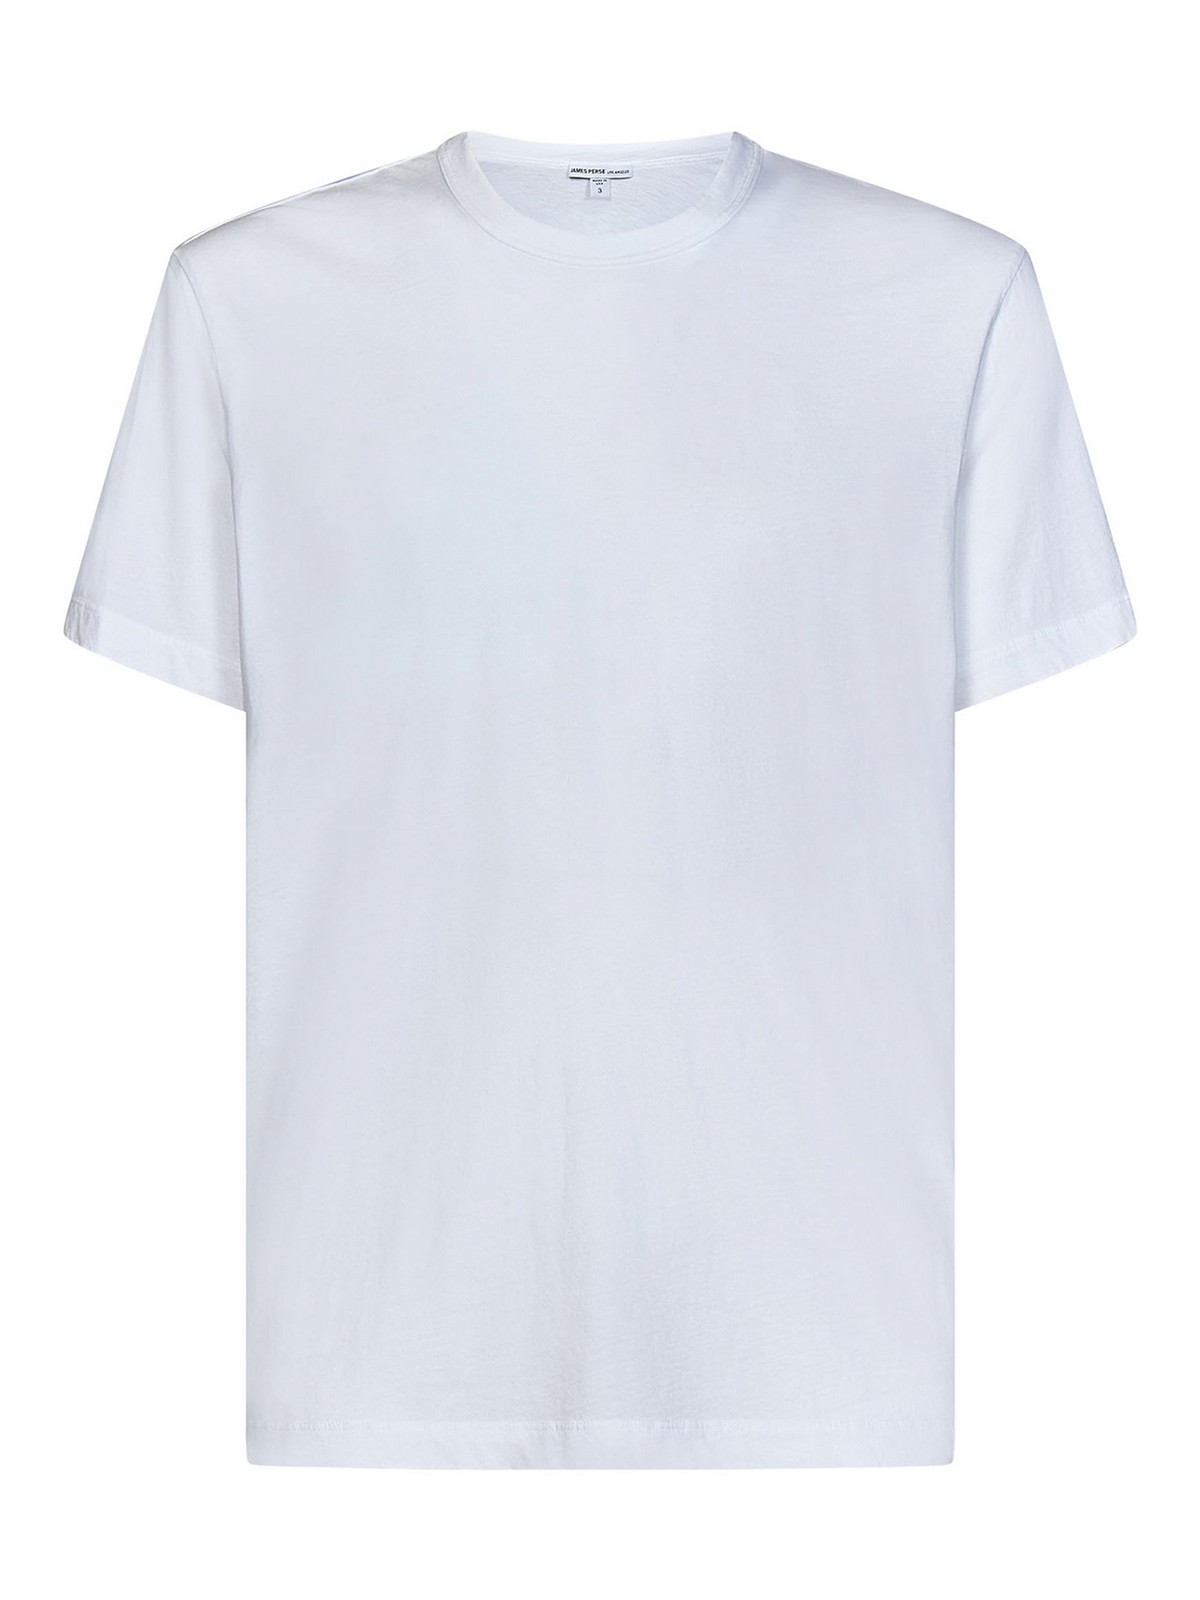 James Perse White Crewneck T-shirt